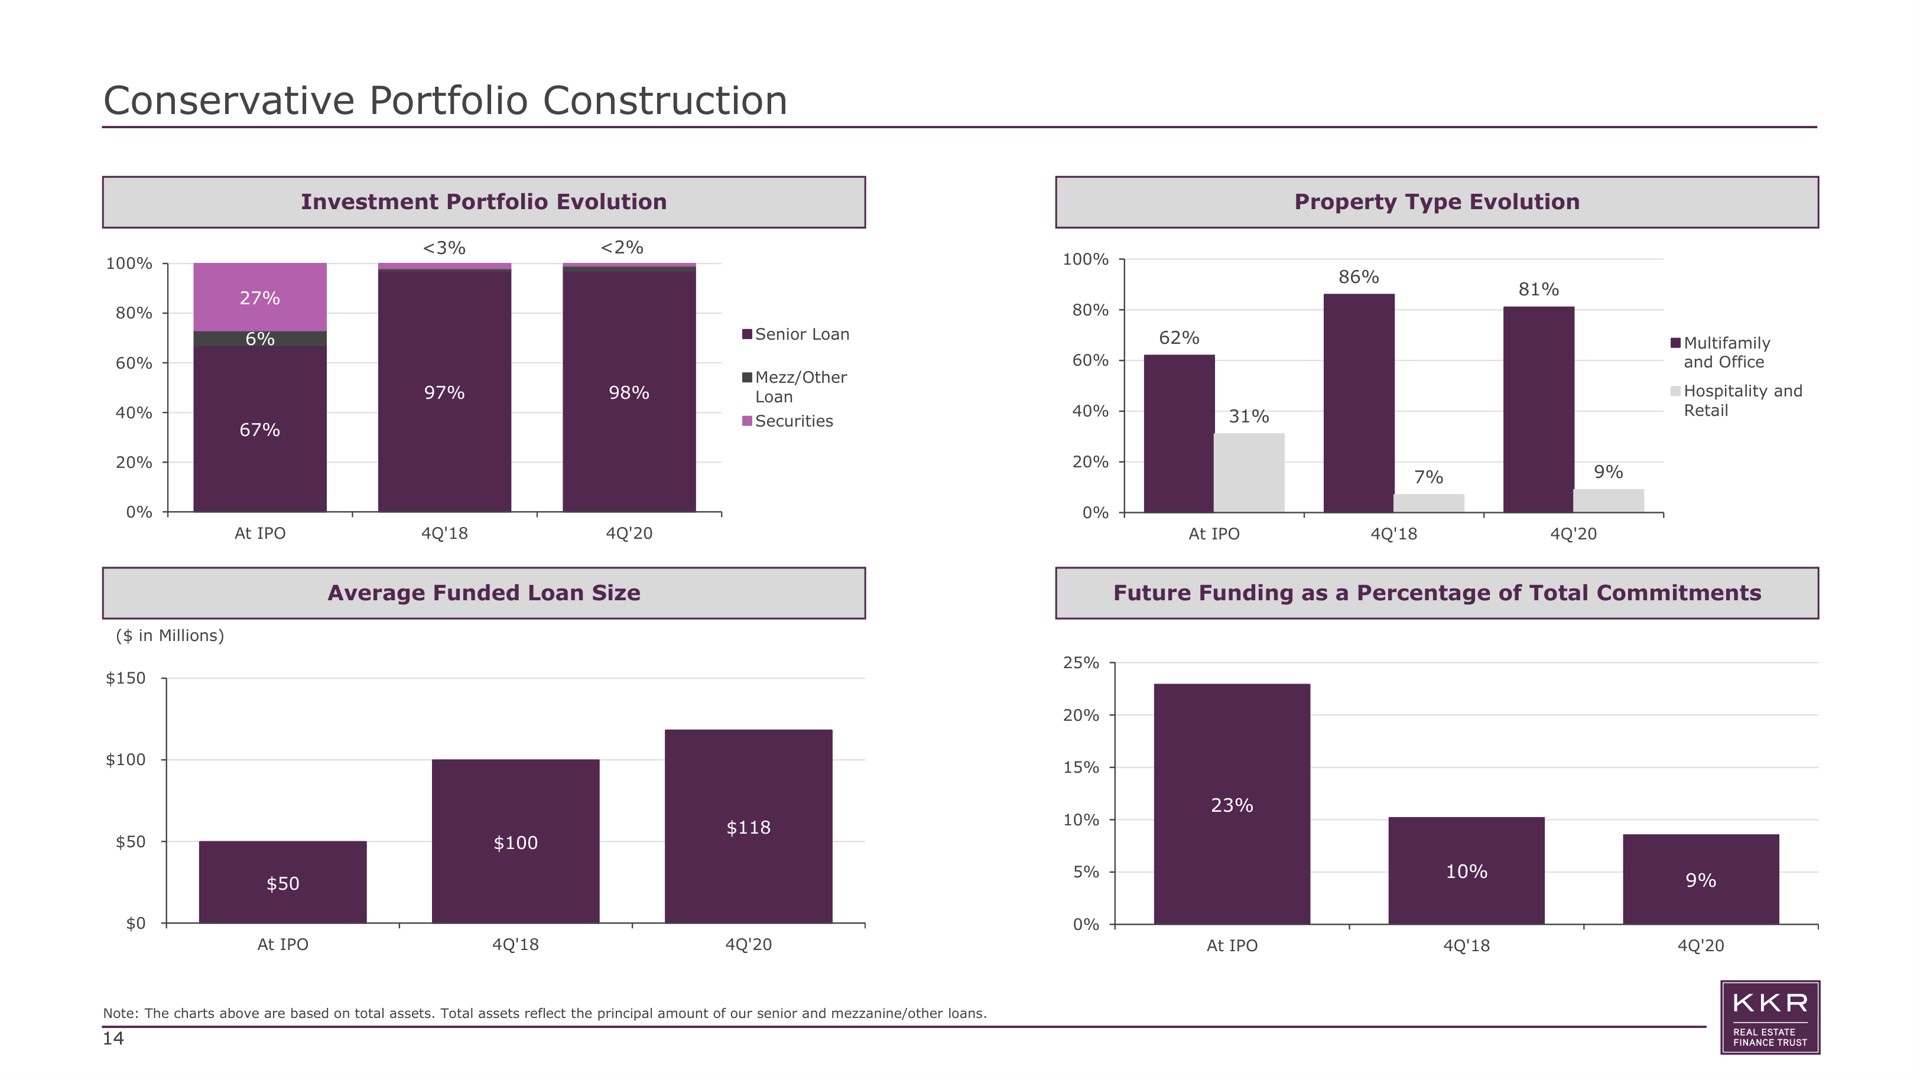 conservative portfolio construction | KKR Real Estate Finance Trust